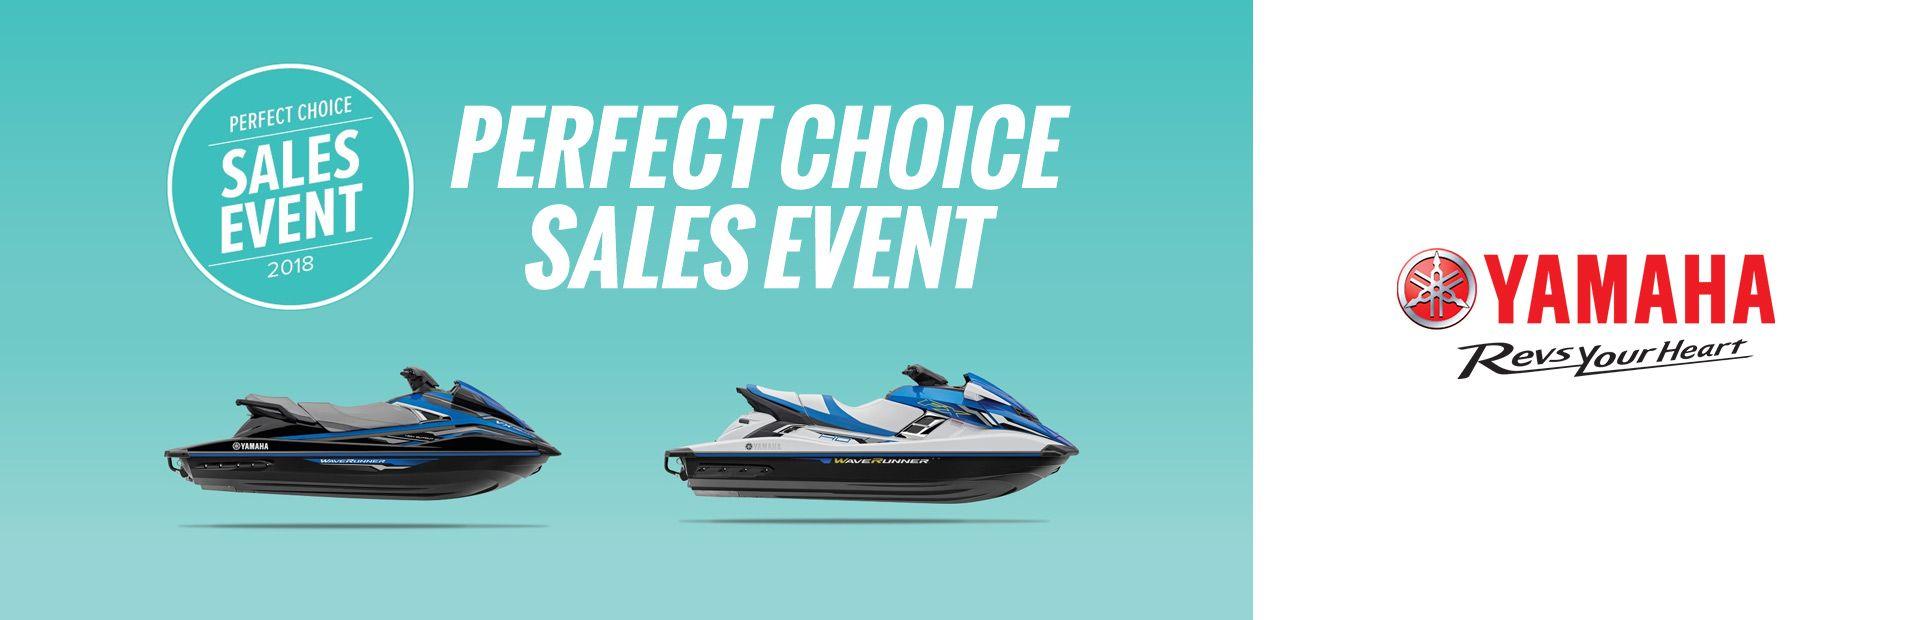 Yamaha Boat Logo - Yamaha - Perfect Choice Sales Event Lake Springfield Marina ...